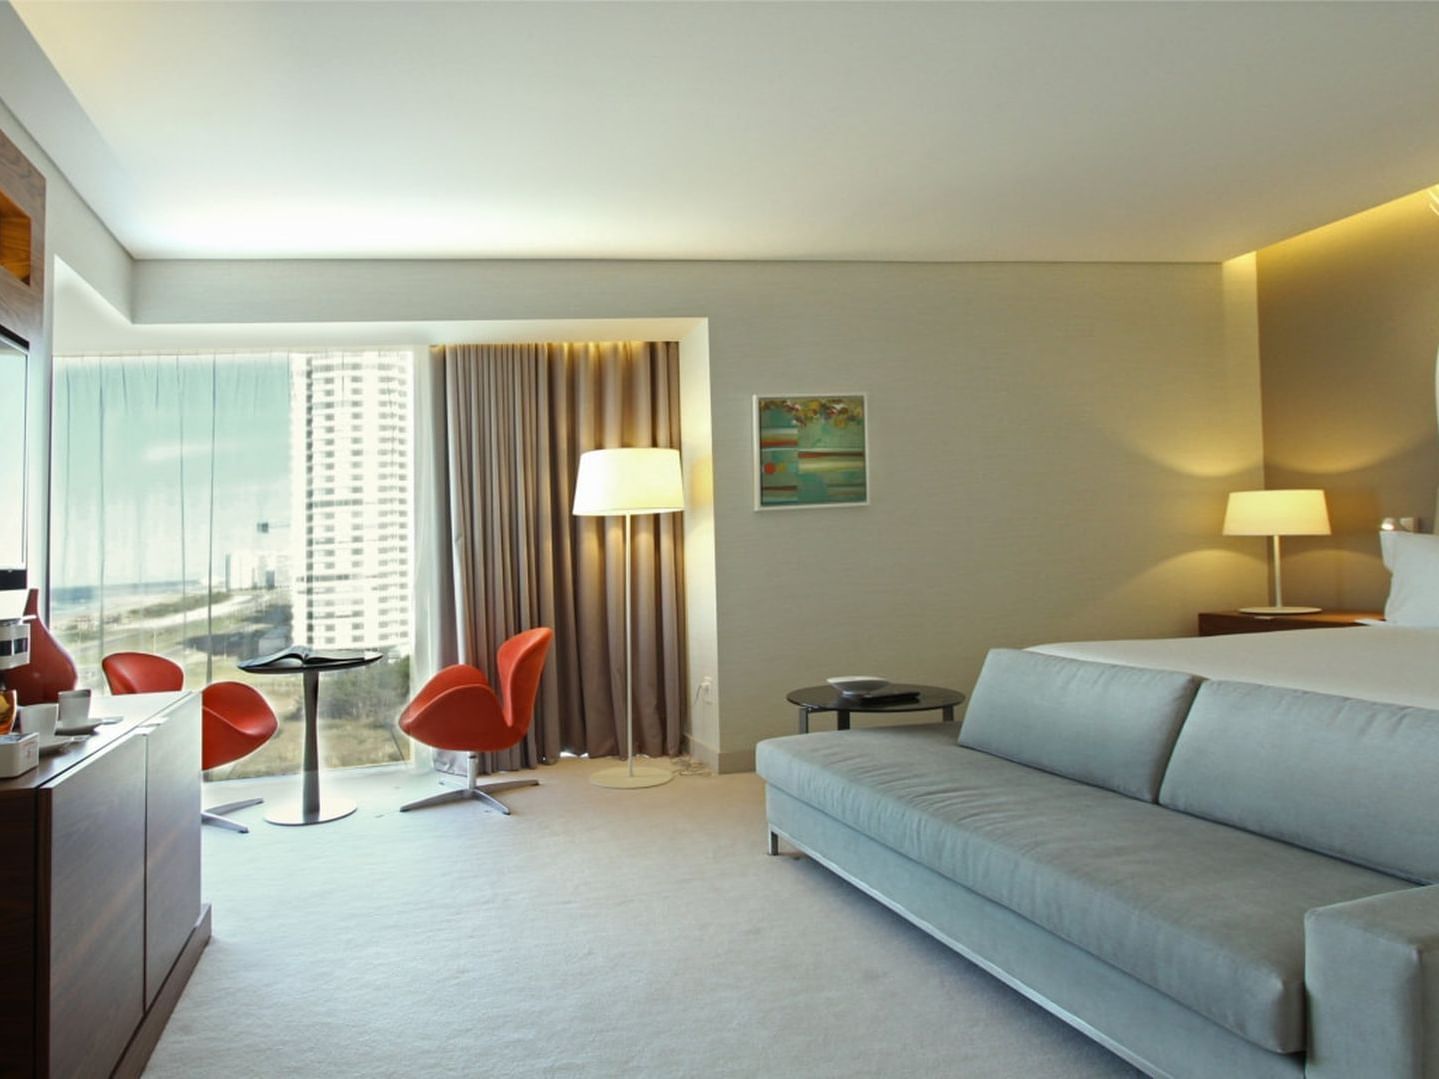 Lounge area in Presidential Suite at Grand Hotel Punta del Este